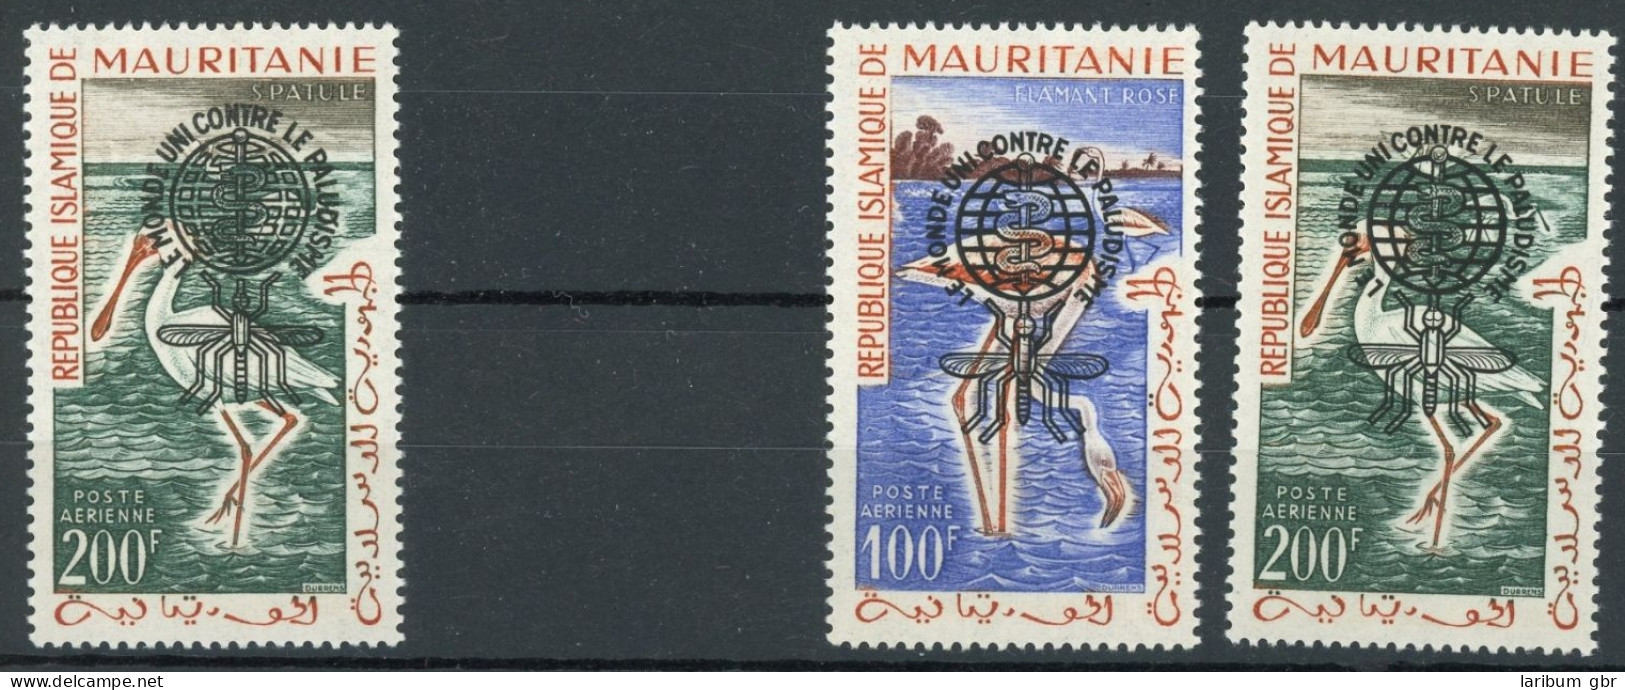 Mauretanien VIII Type I, VII-VIII Type II Postfrisch Malaria #GL693 - Mauritanie (1960-...)